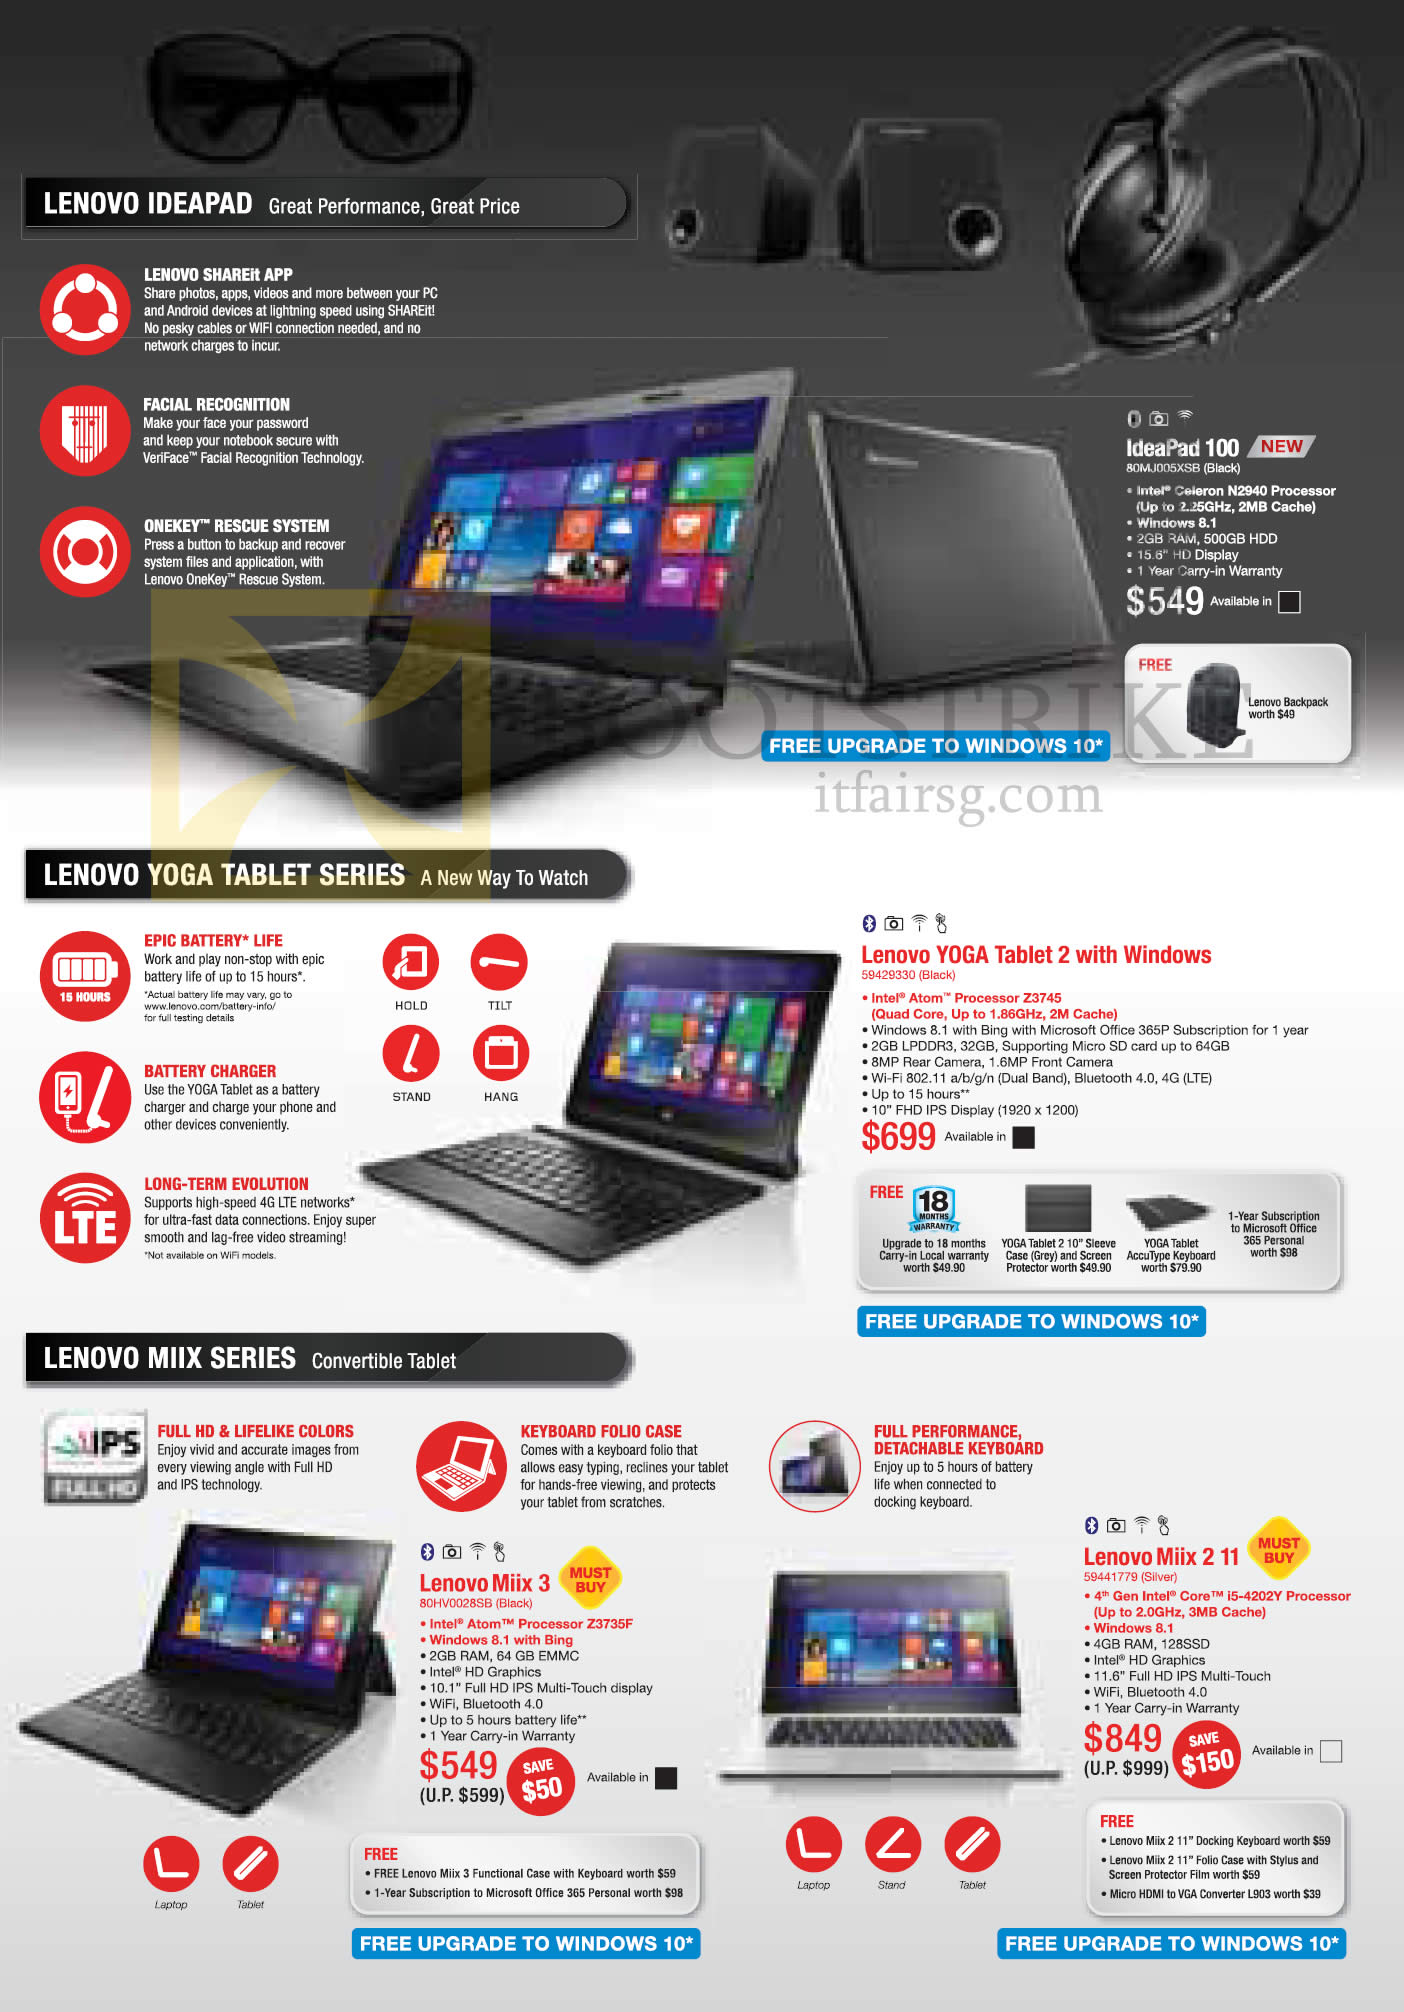 PC SHOW 2015 price list image brochure of Lenovo Notebooks Ideapad Yoga, Ideapad 100, Tablet 2, Miix 3, Miix 2 11